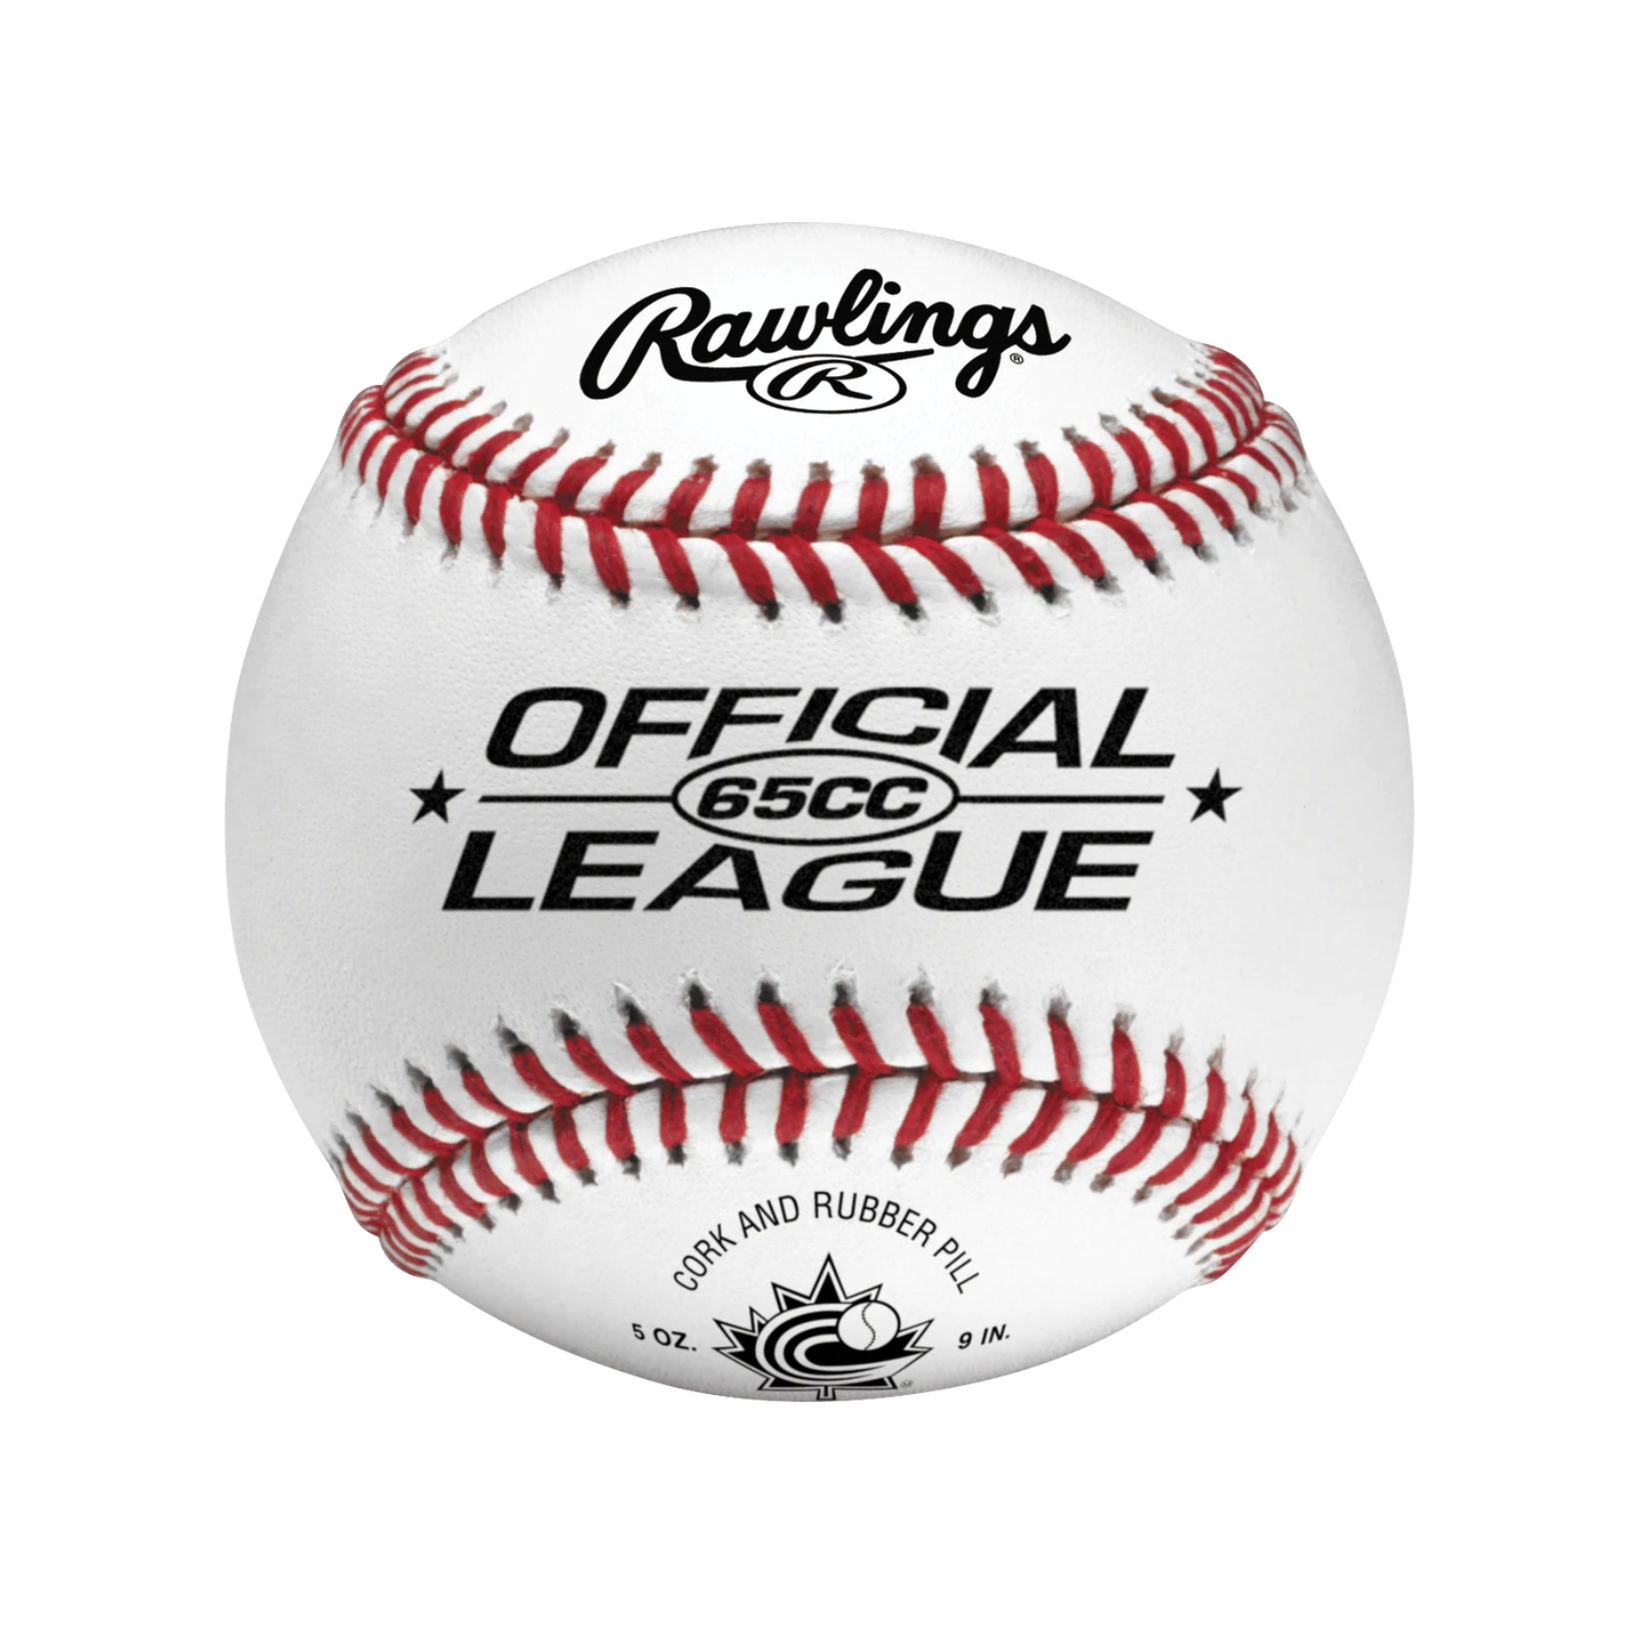 Rawlings 65CC League Game Ball - Dozen